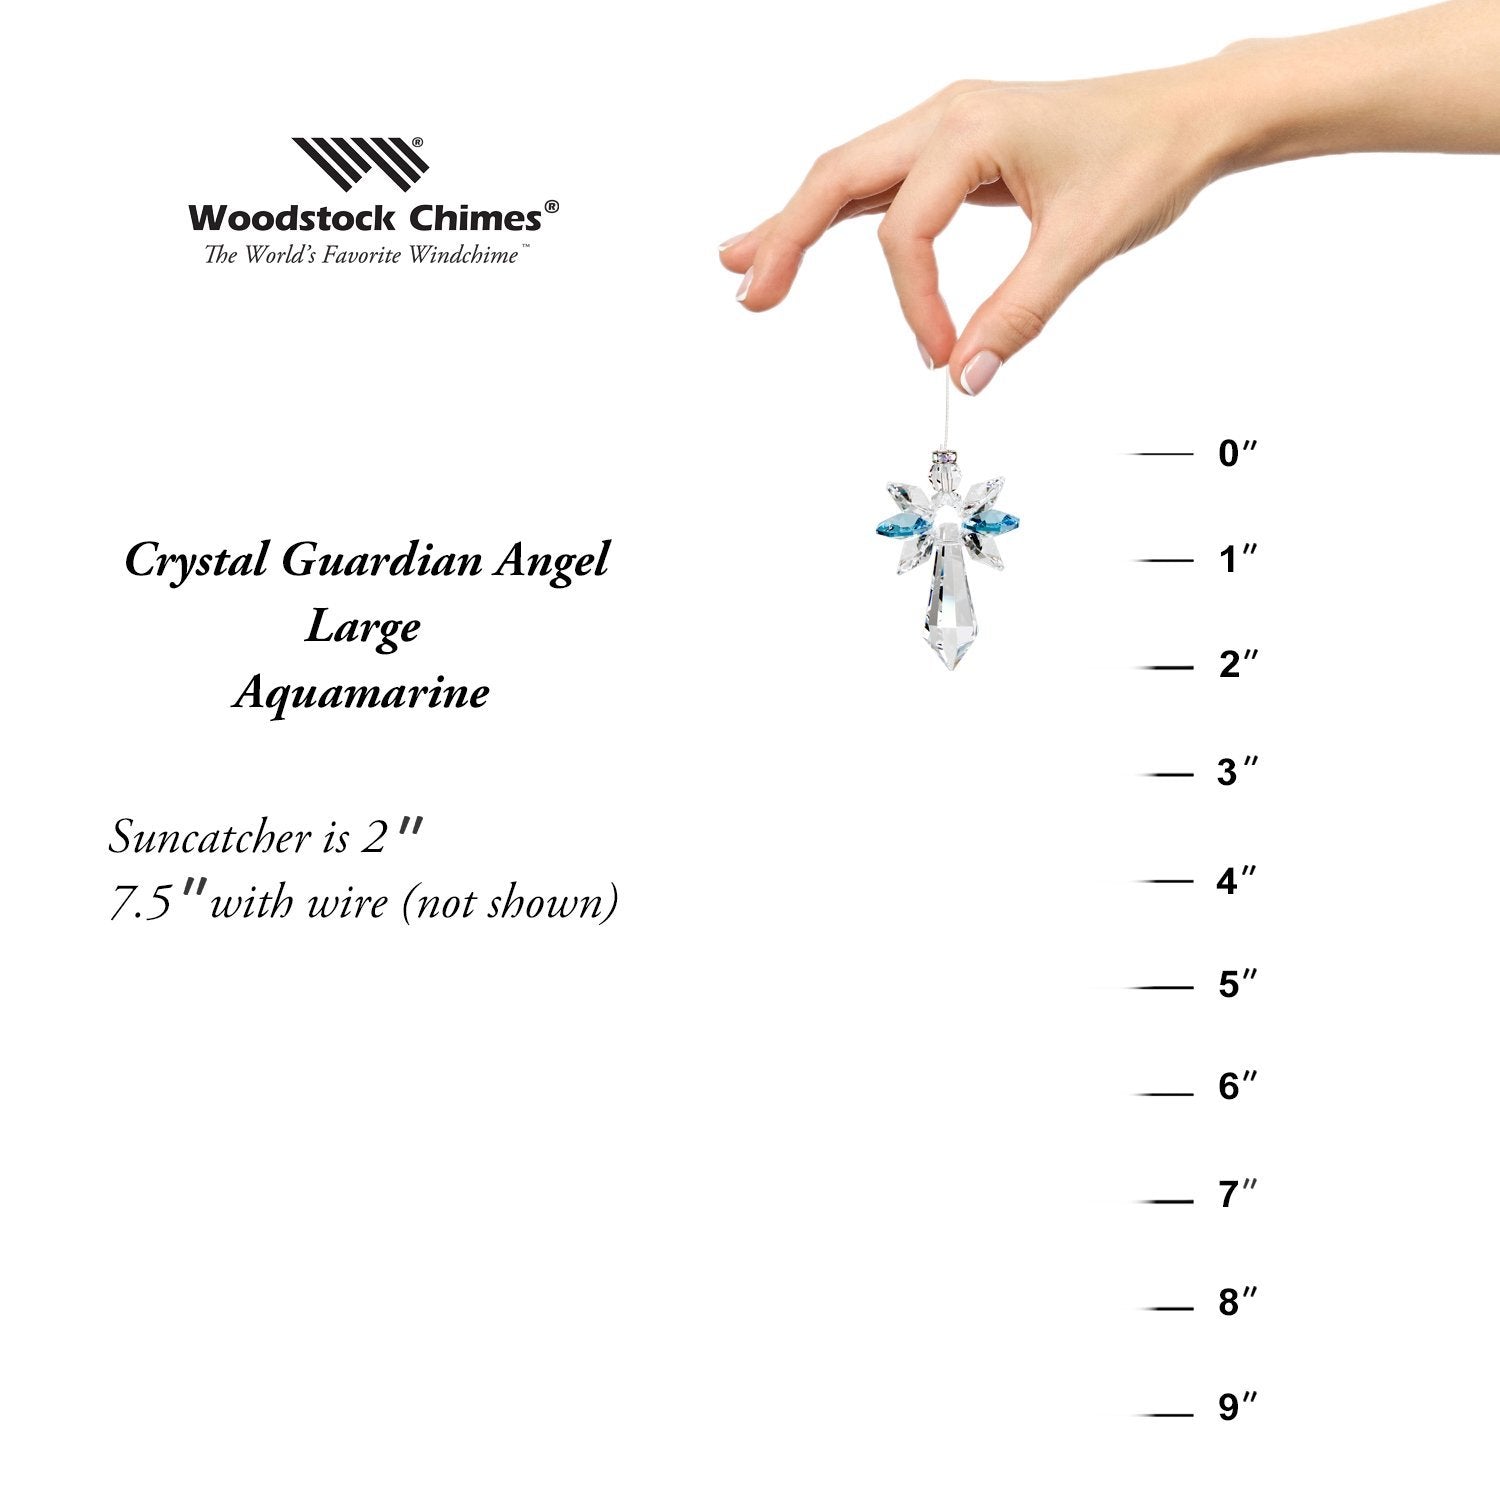 Crystal Guardian Angel Suncatcher - Large, Aquamarine proportion image